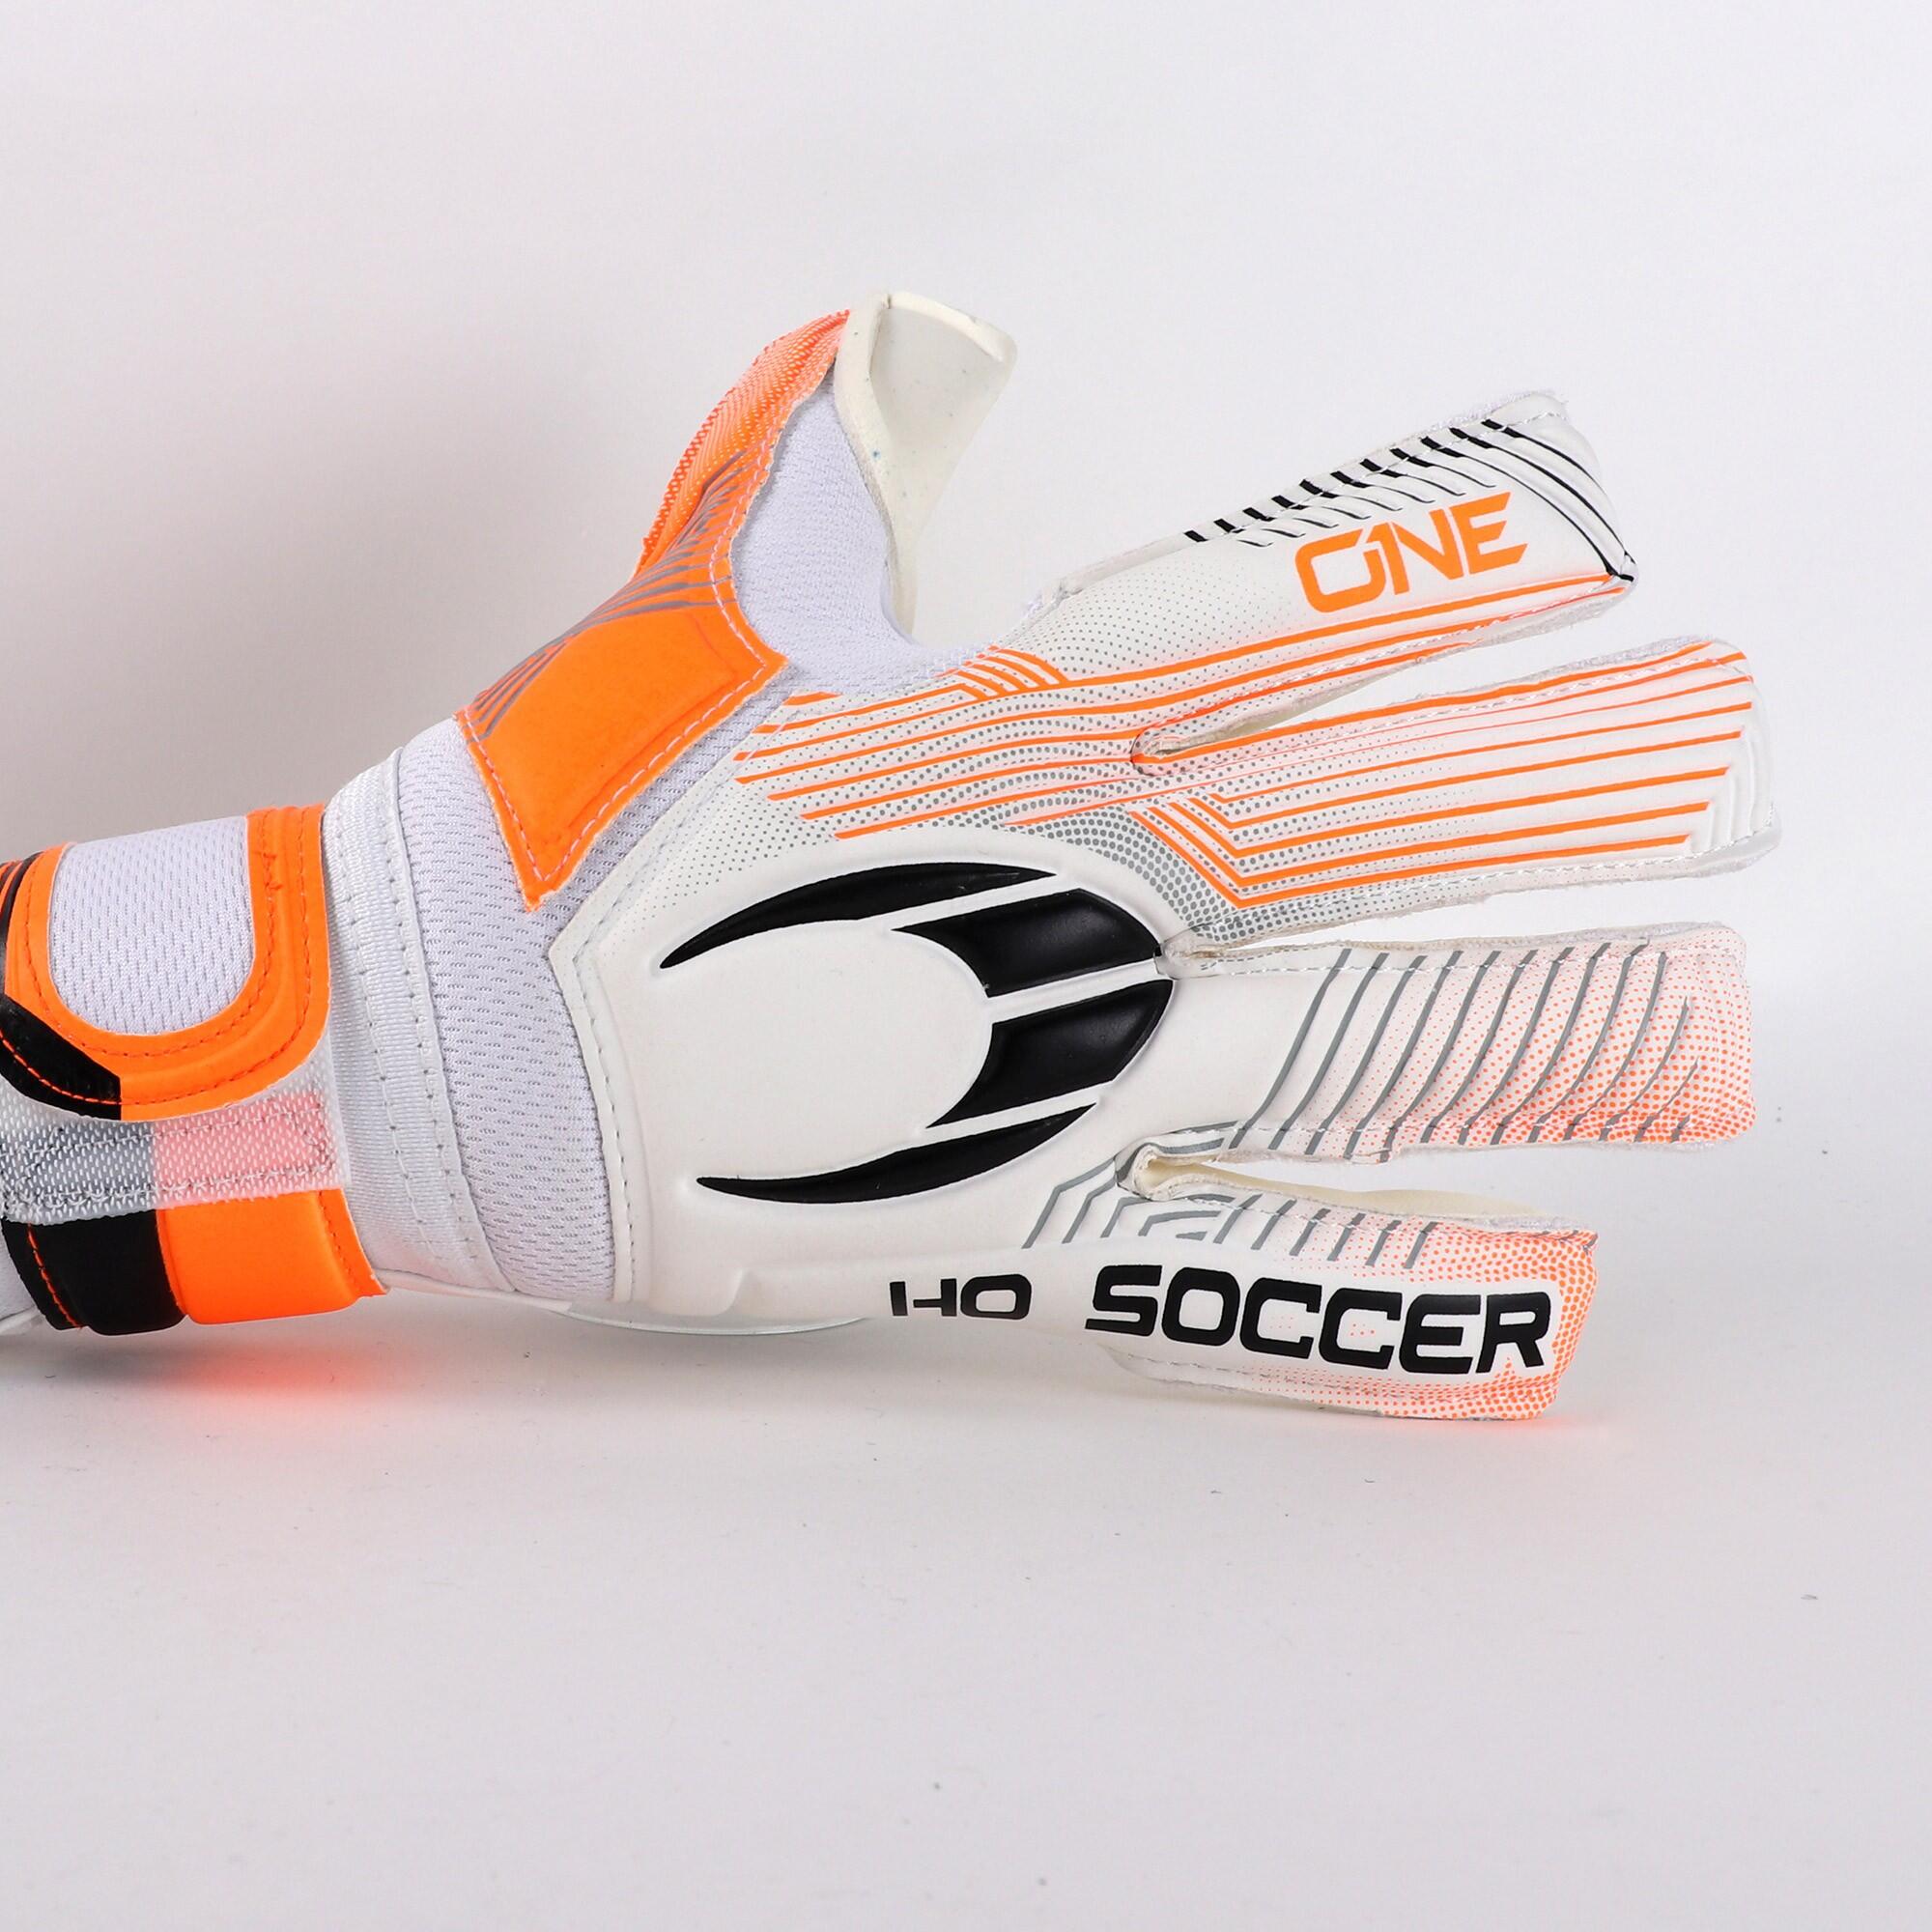 HO Soccer One Negative (5mm all surface)   Goalkeeper Gloves 5/5